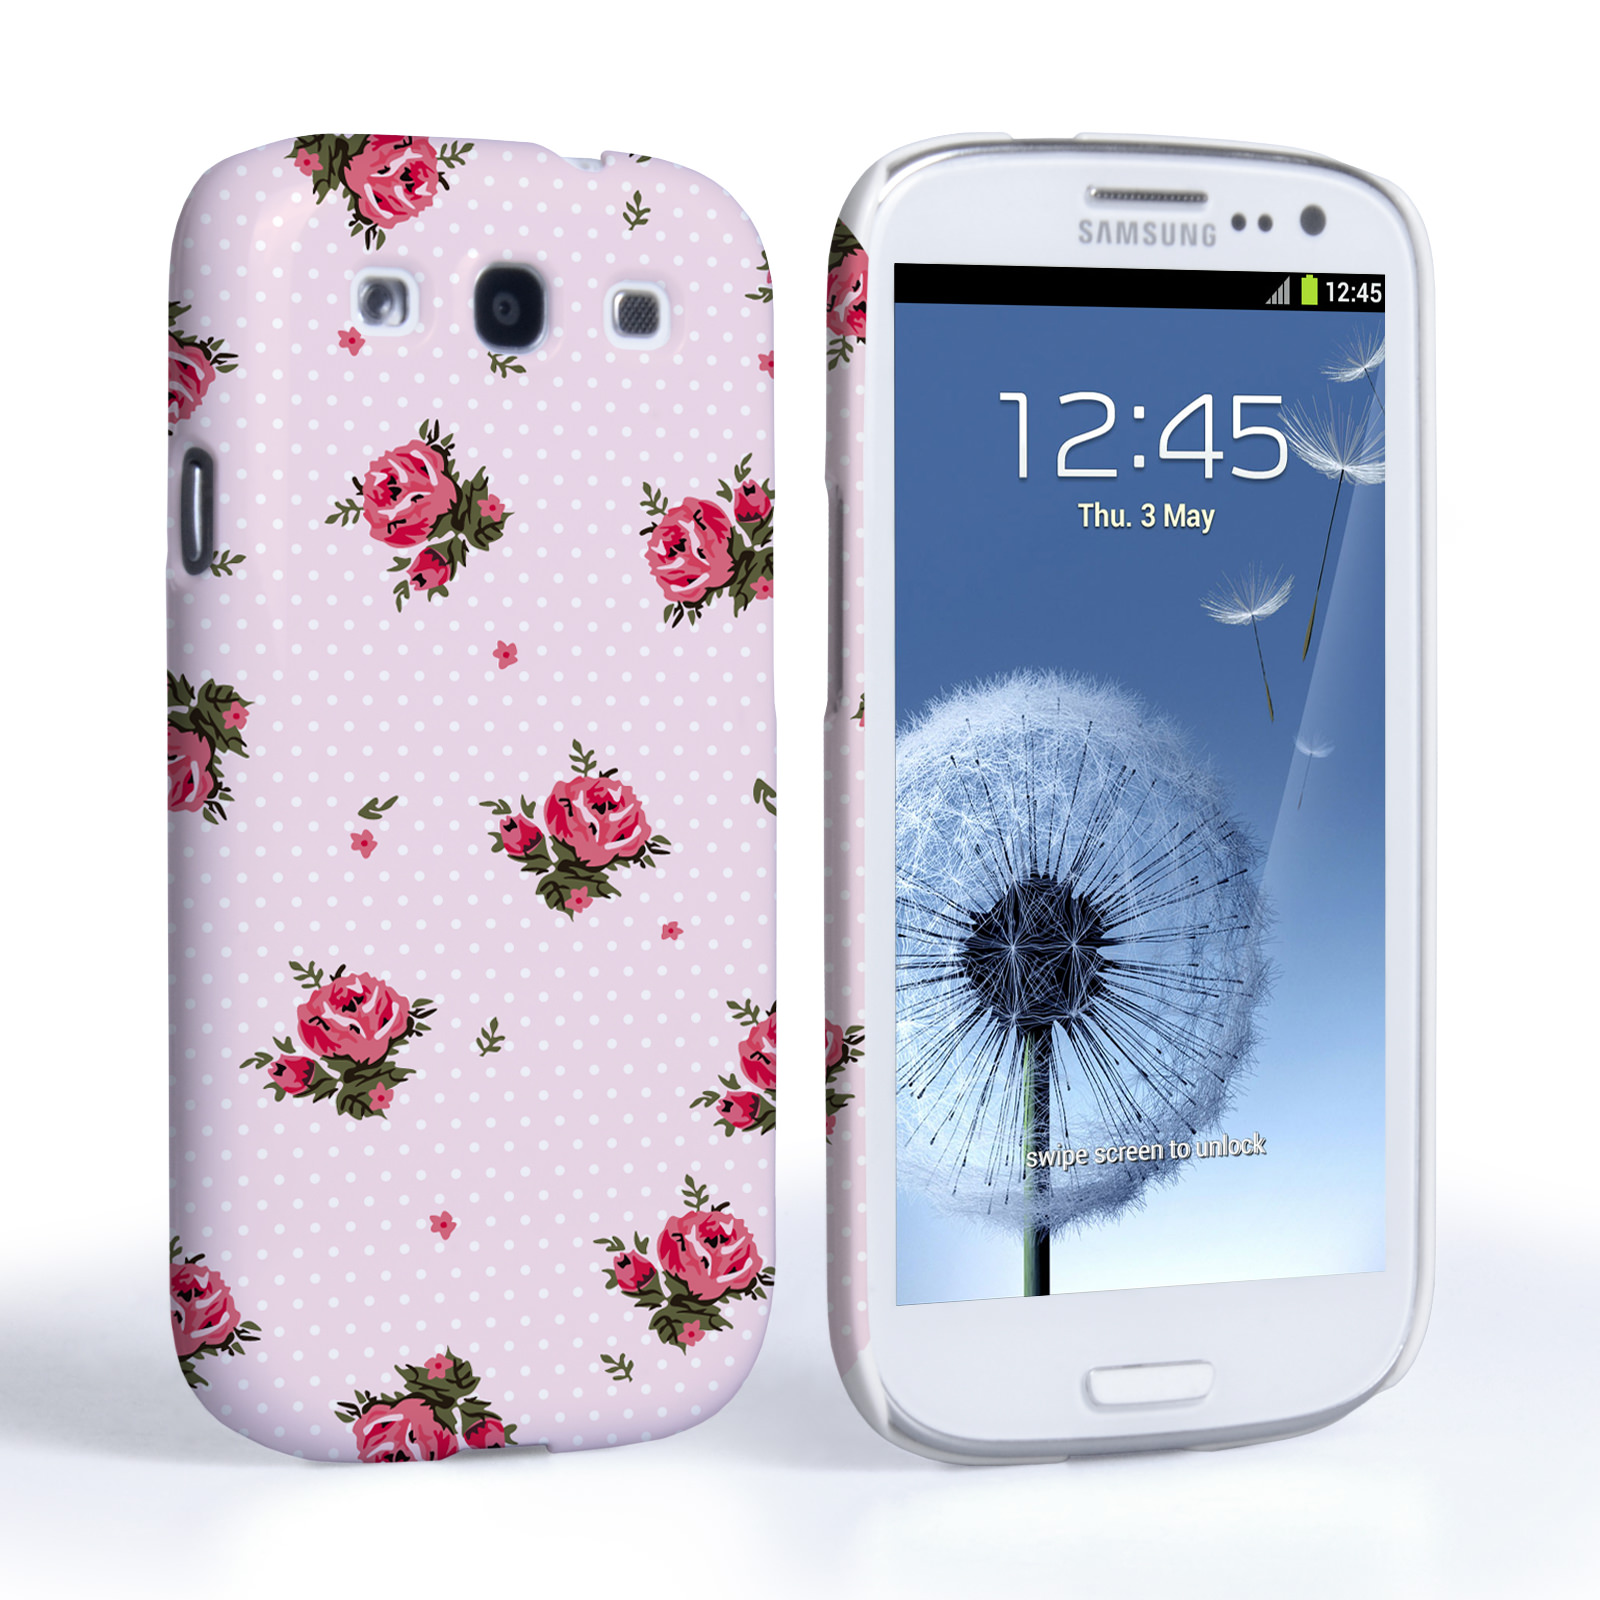 Caseflex Samsung Galaxy S3 Vintage Roses Polka Dot Wallpaper Hard Case – Pink